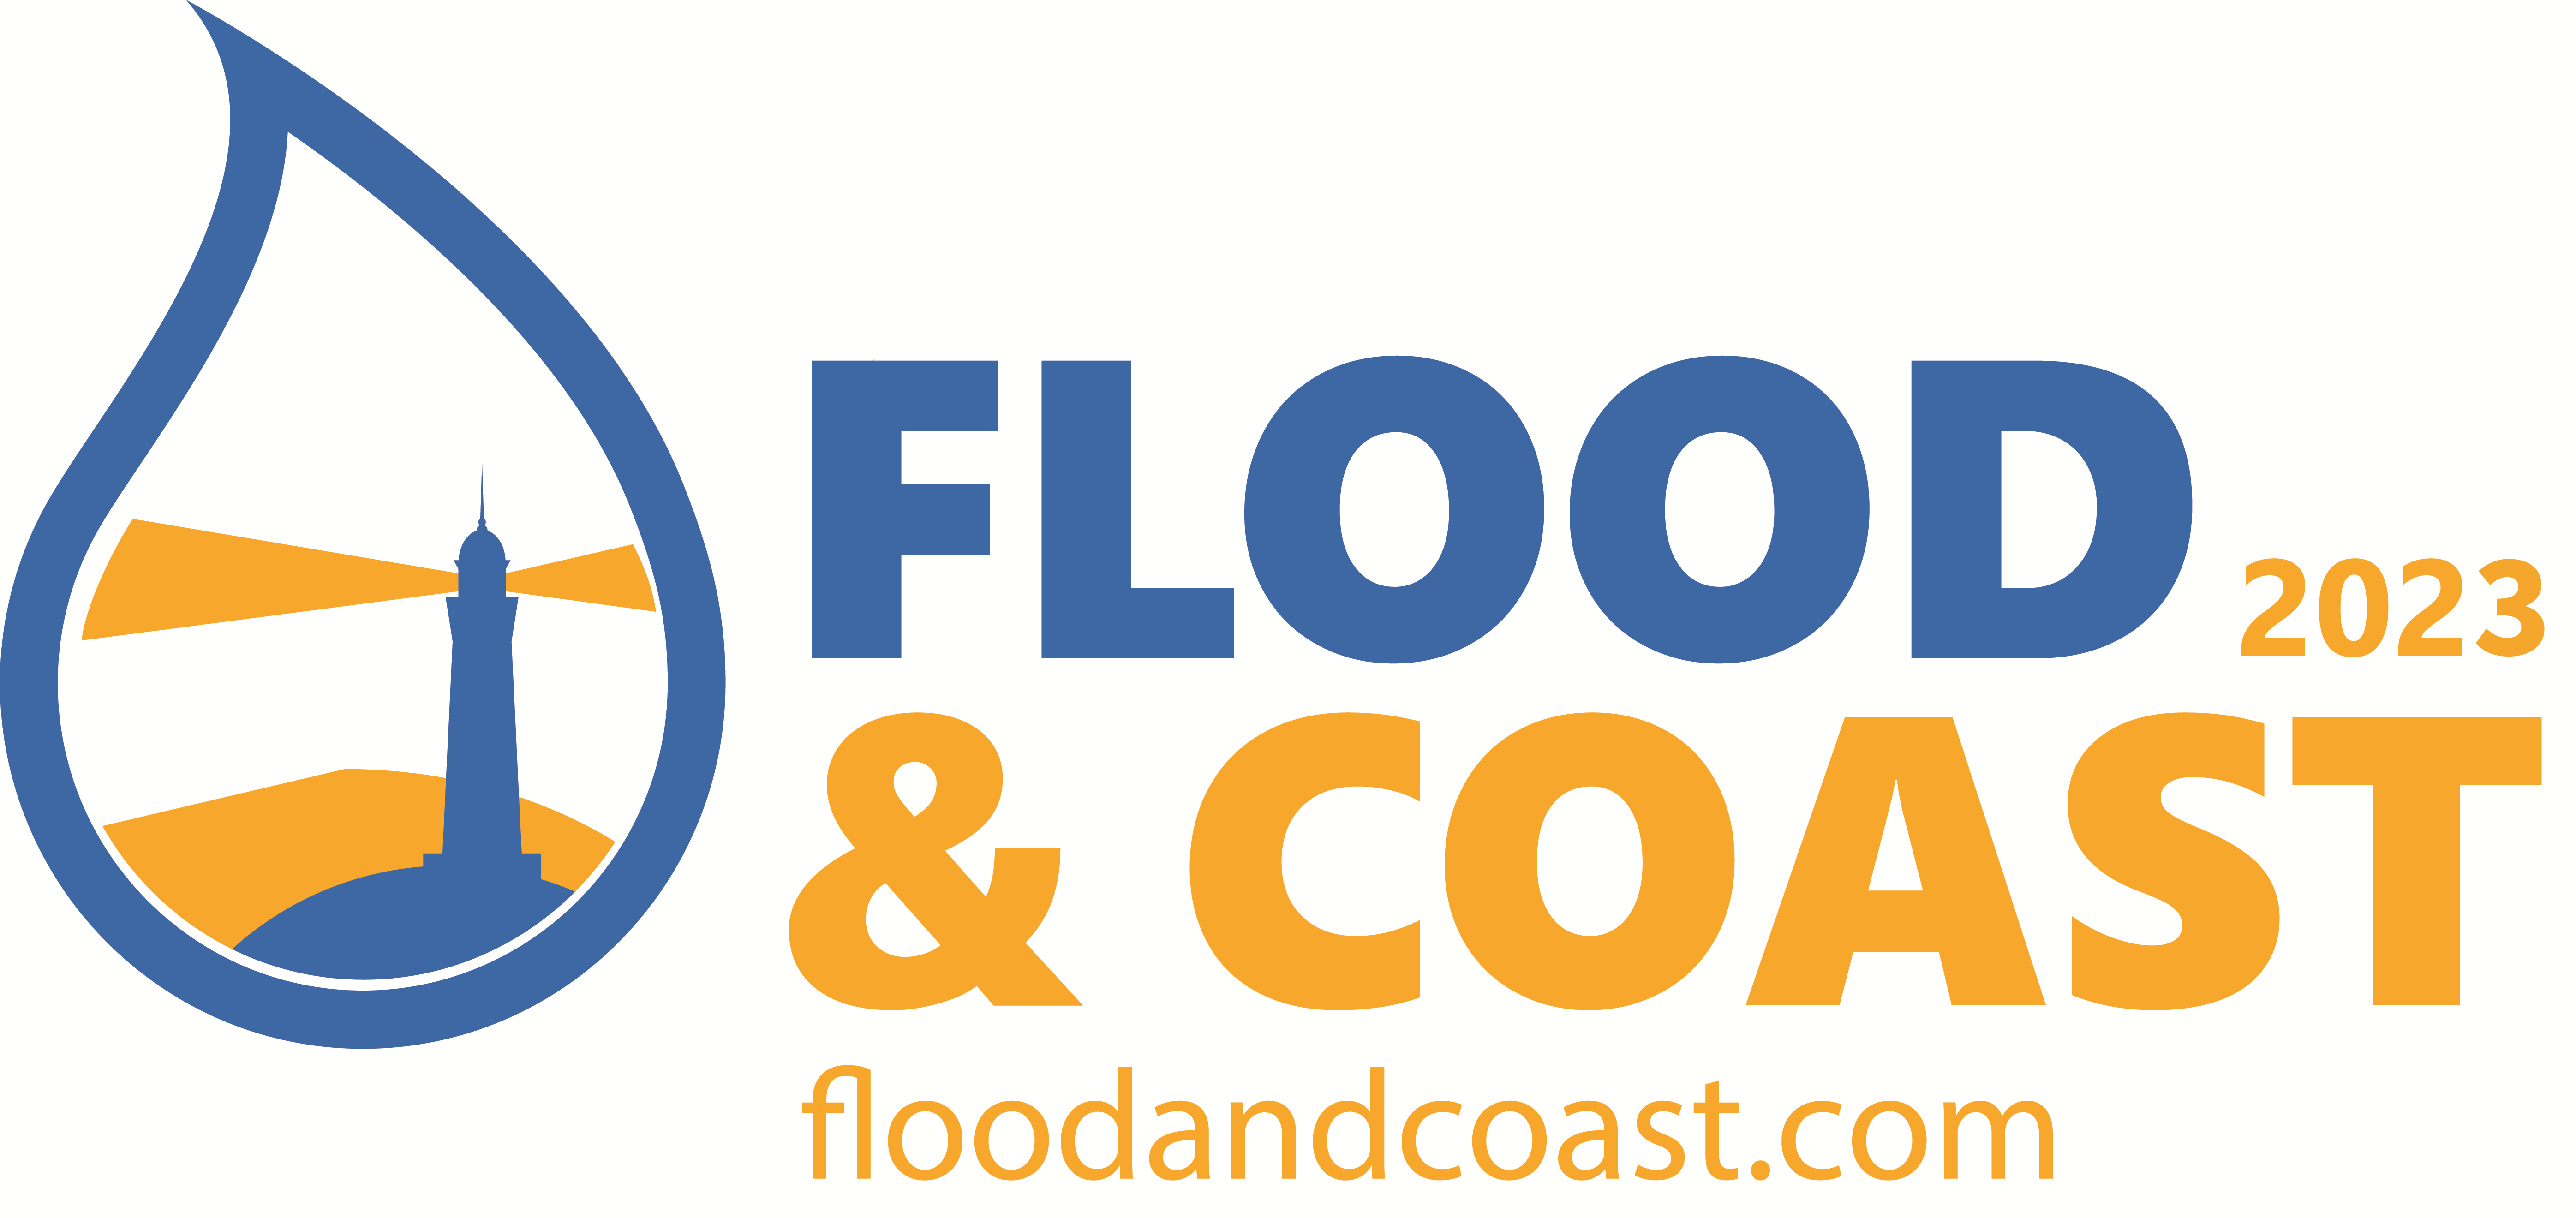 Flood & Coast Conference & Exhibition Water Magazine